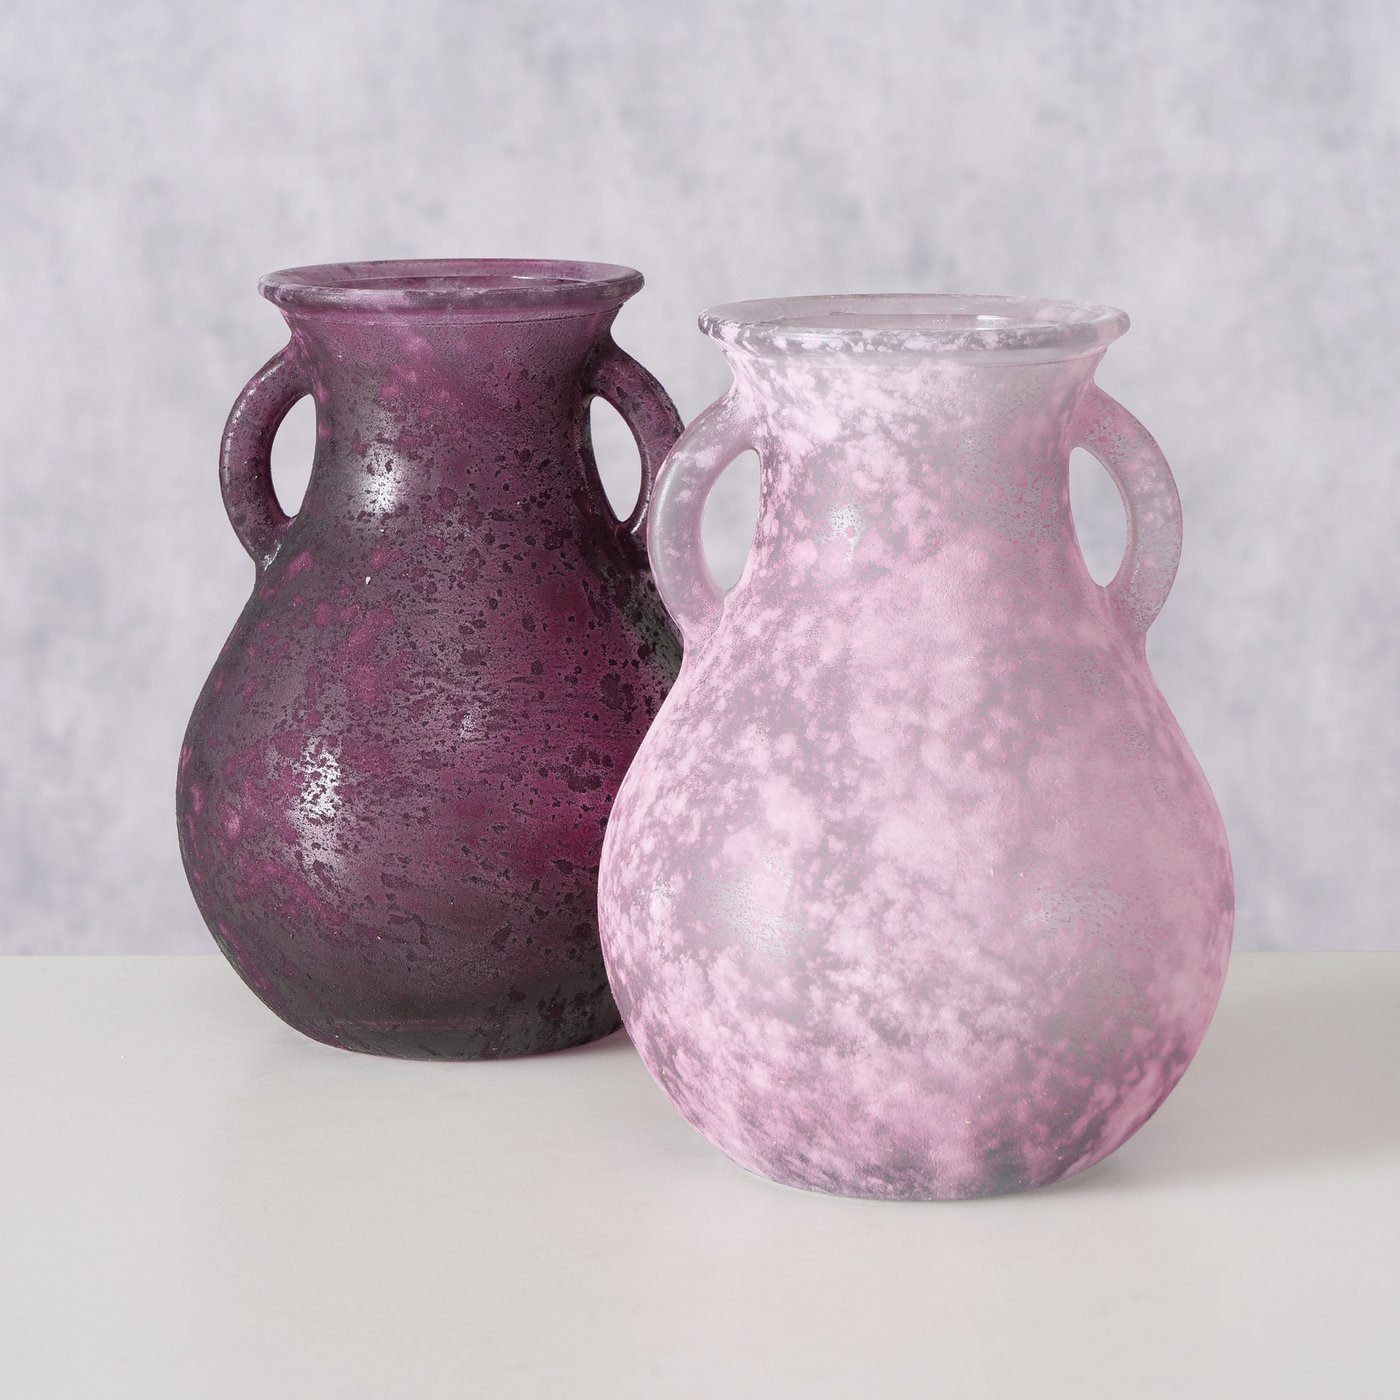 BOLTZE Dekovase 2er Set "Pitcher" aus Glas in lila/rosa, Vase Blumenvase